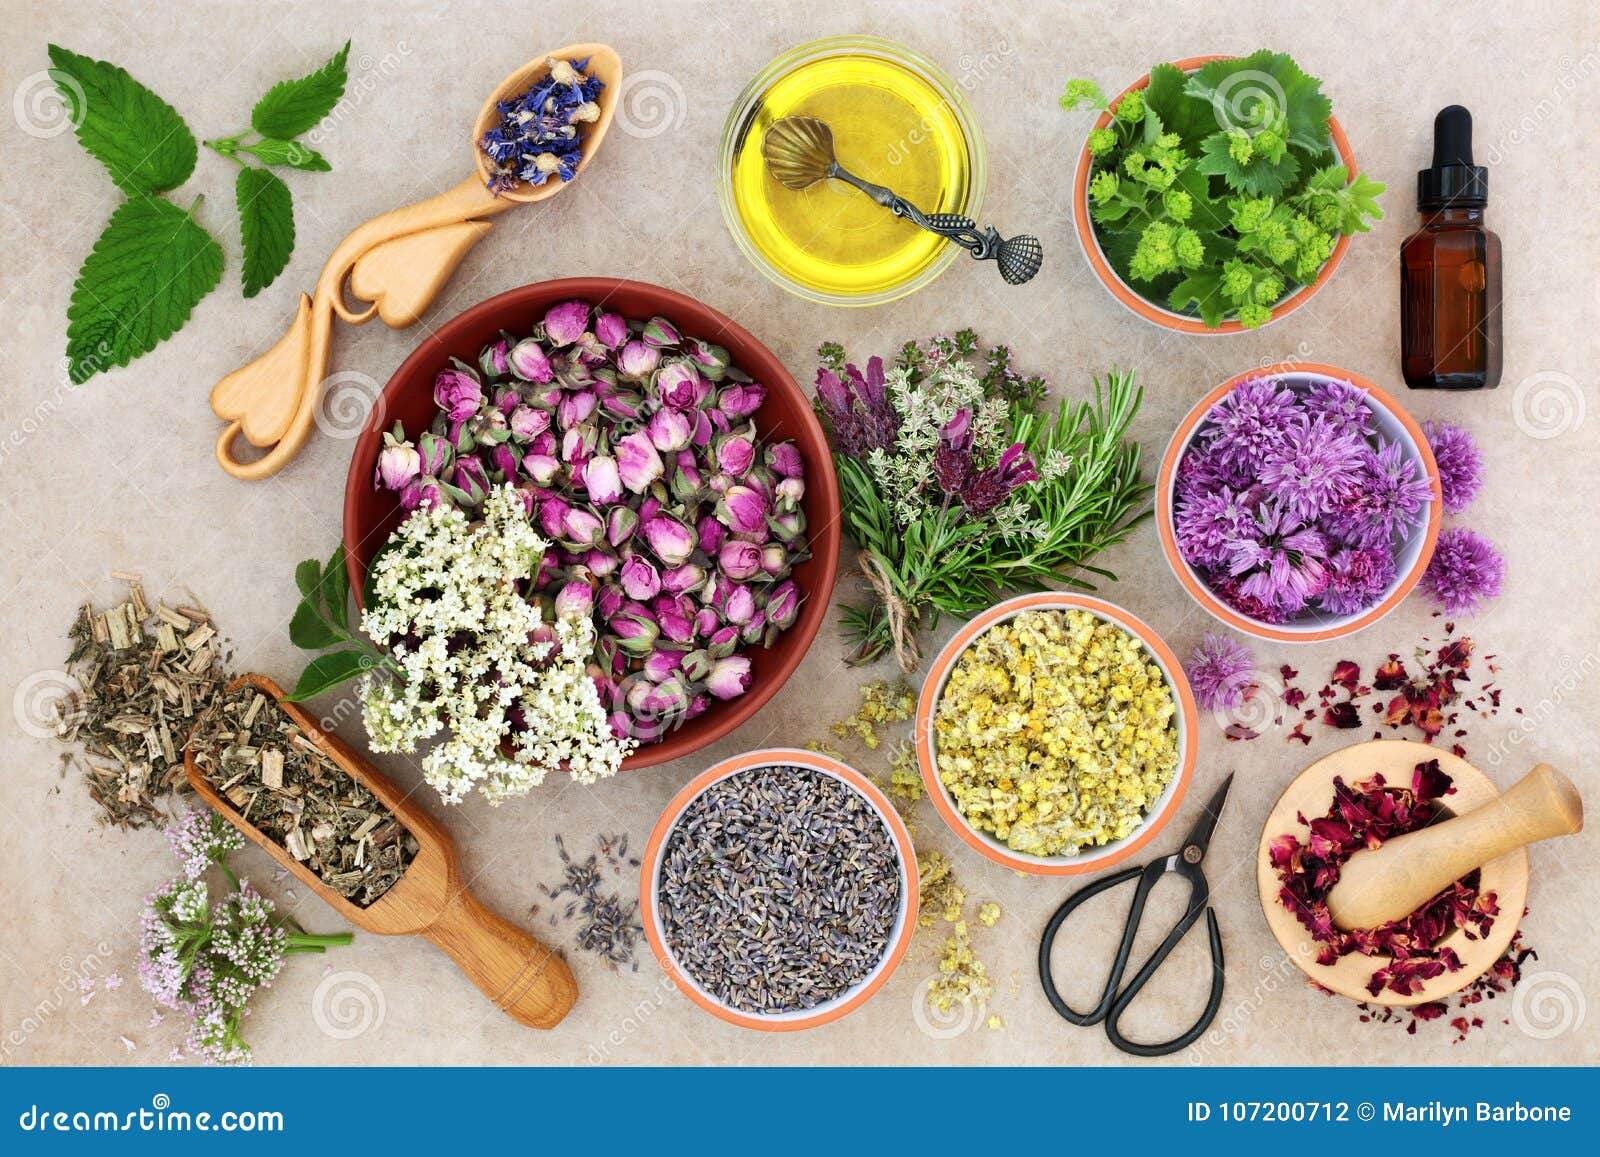 herbal medicine preparation